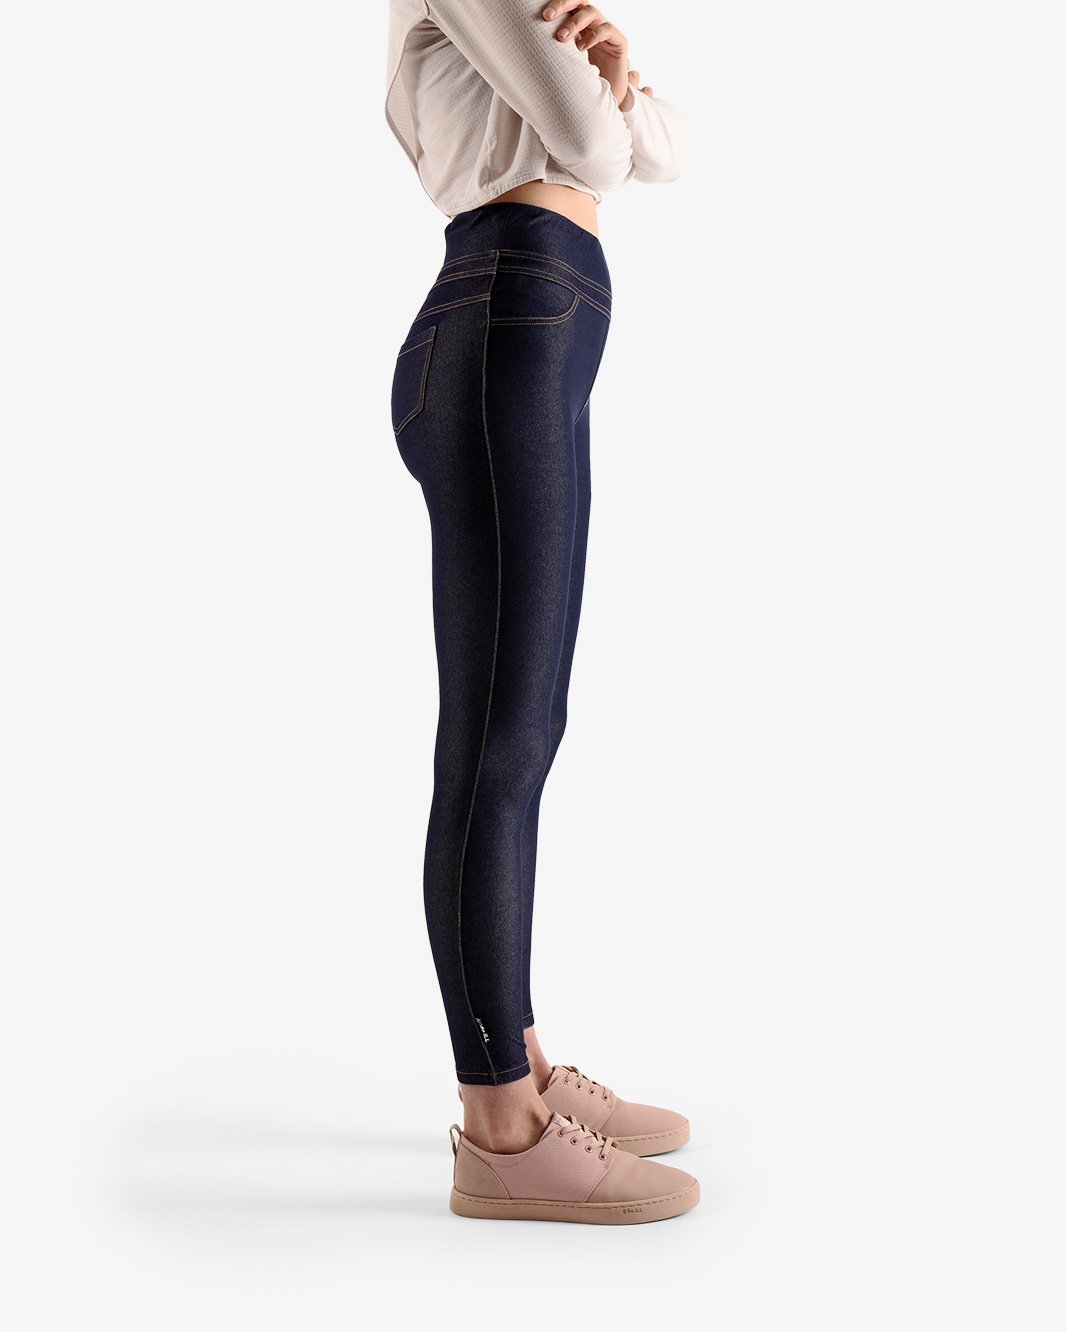 Leggings Push Up Calzedonia Jeans For Women